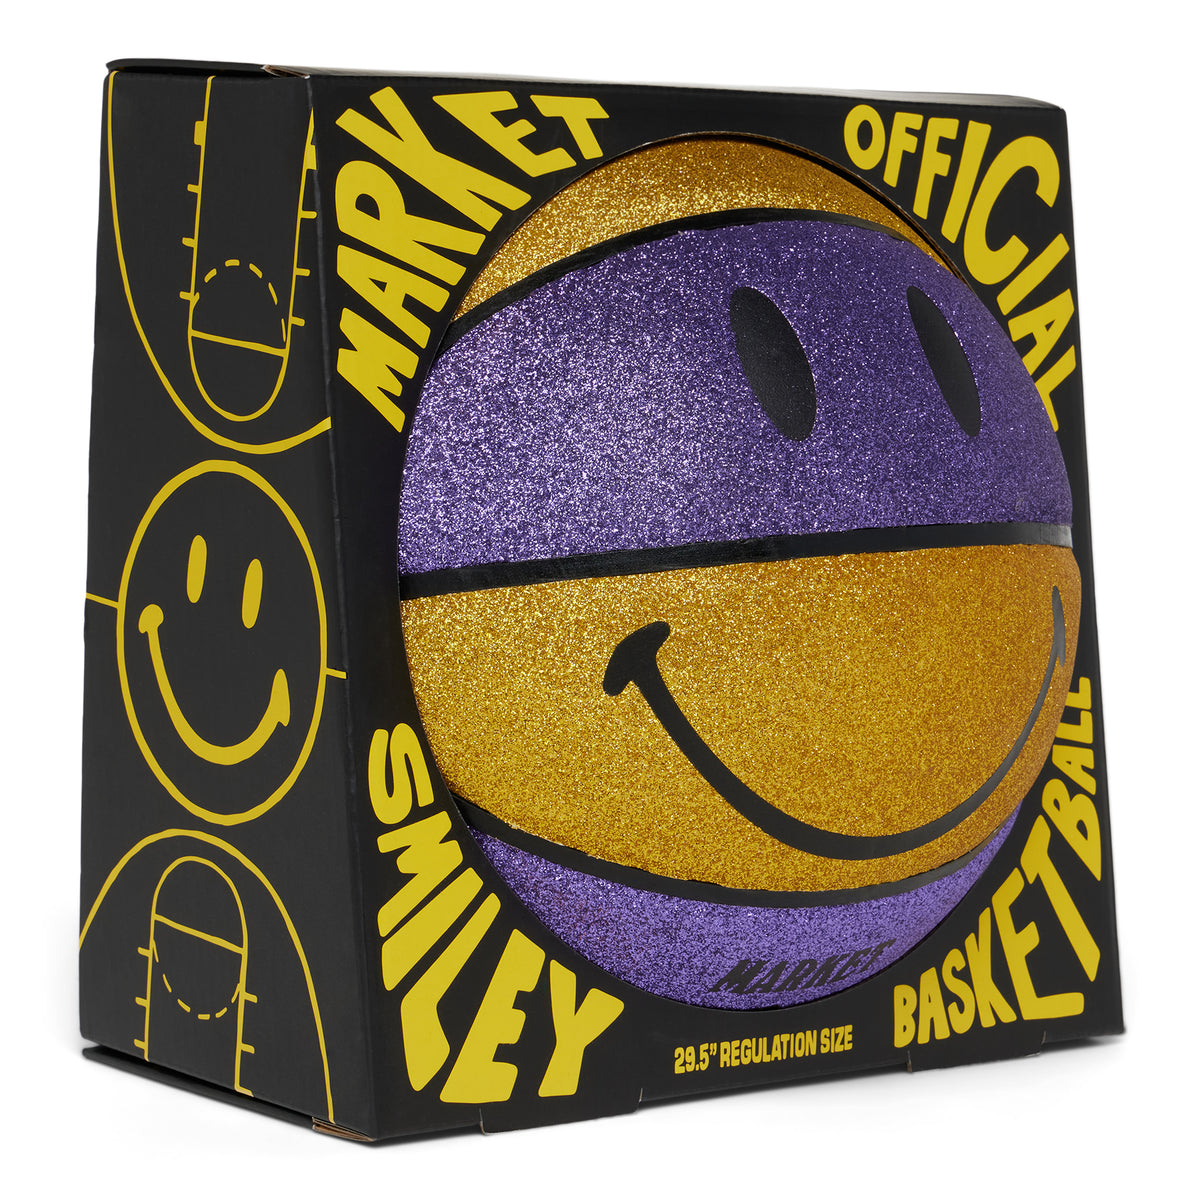 Market Smiley Glitter Showtime Basketball "Yellow & Purple"